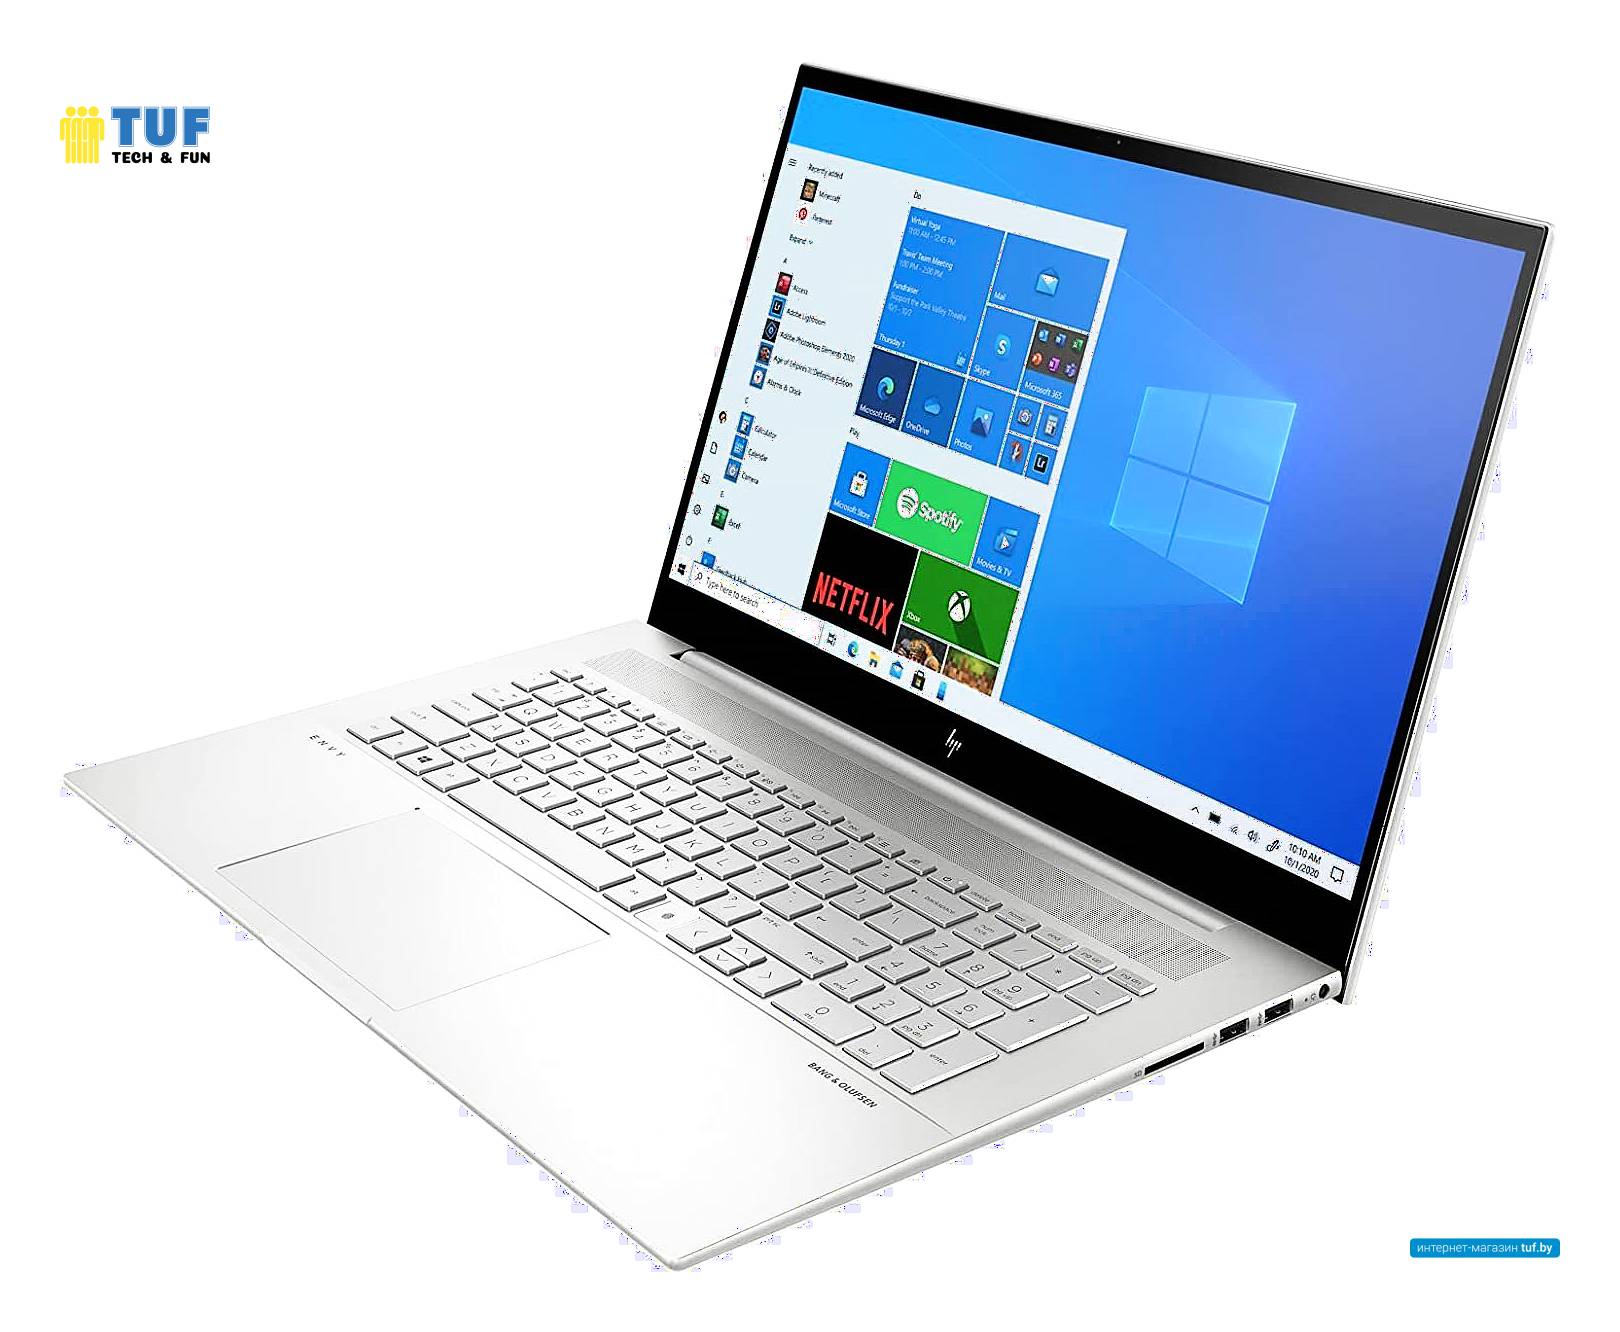 Ноутбук HP Envy 17t-ch100 436W4AV-TSSLi716G1TBFHDW11P